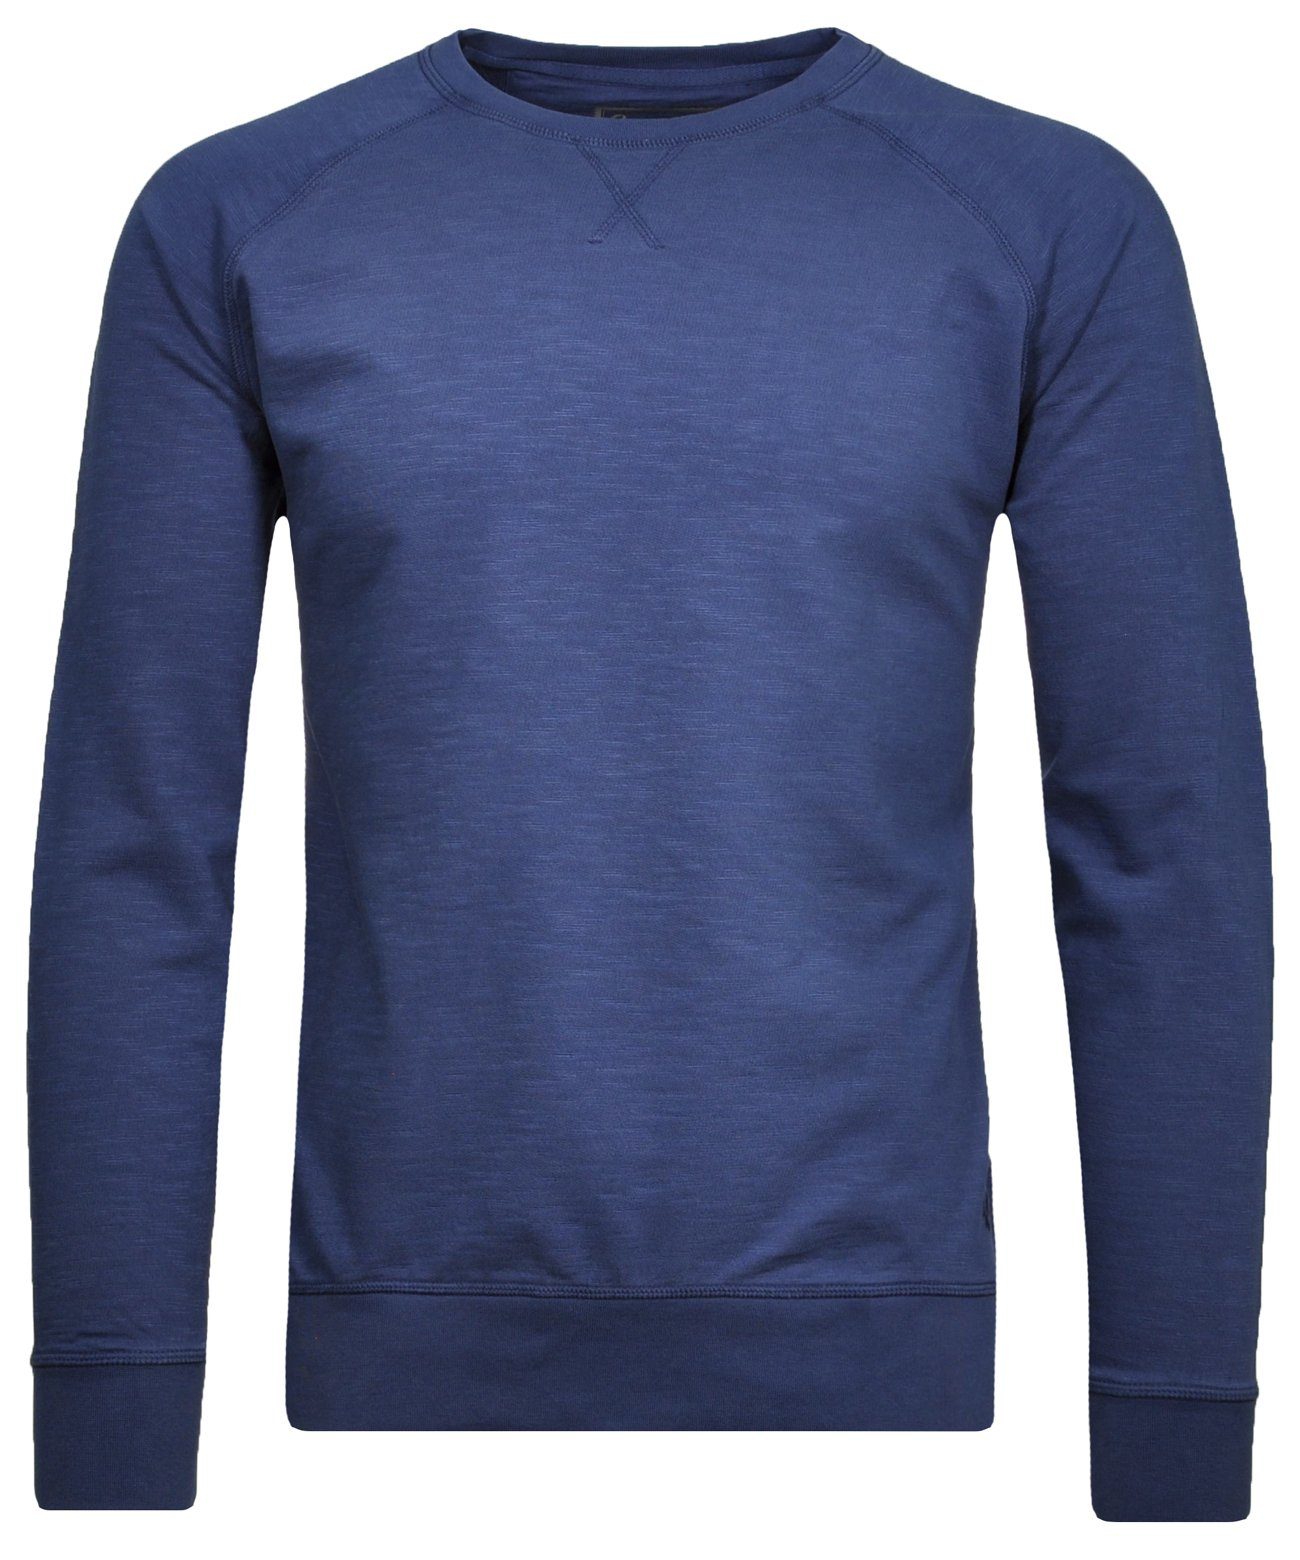 RAGMAN Sweatshirt Nachtblau